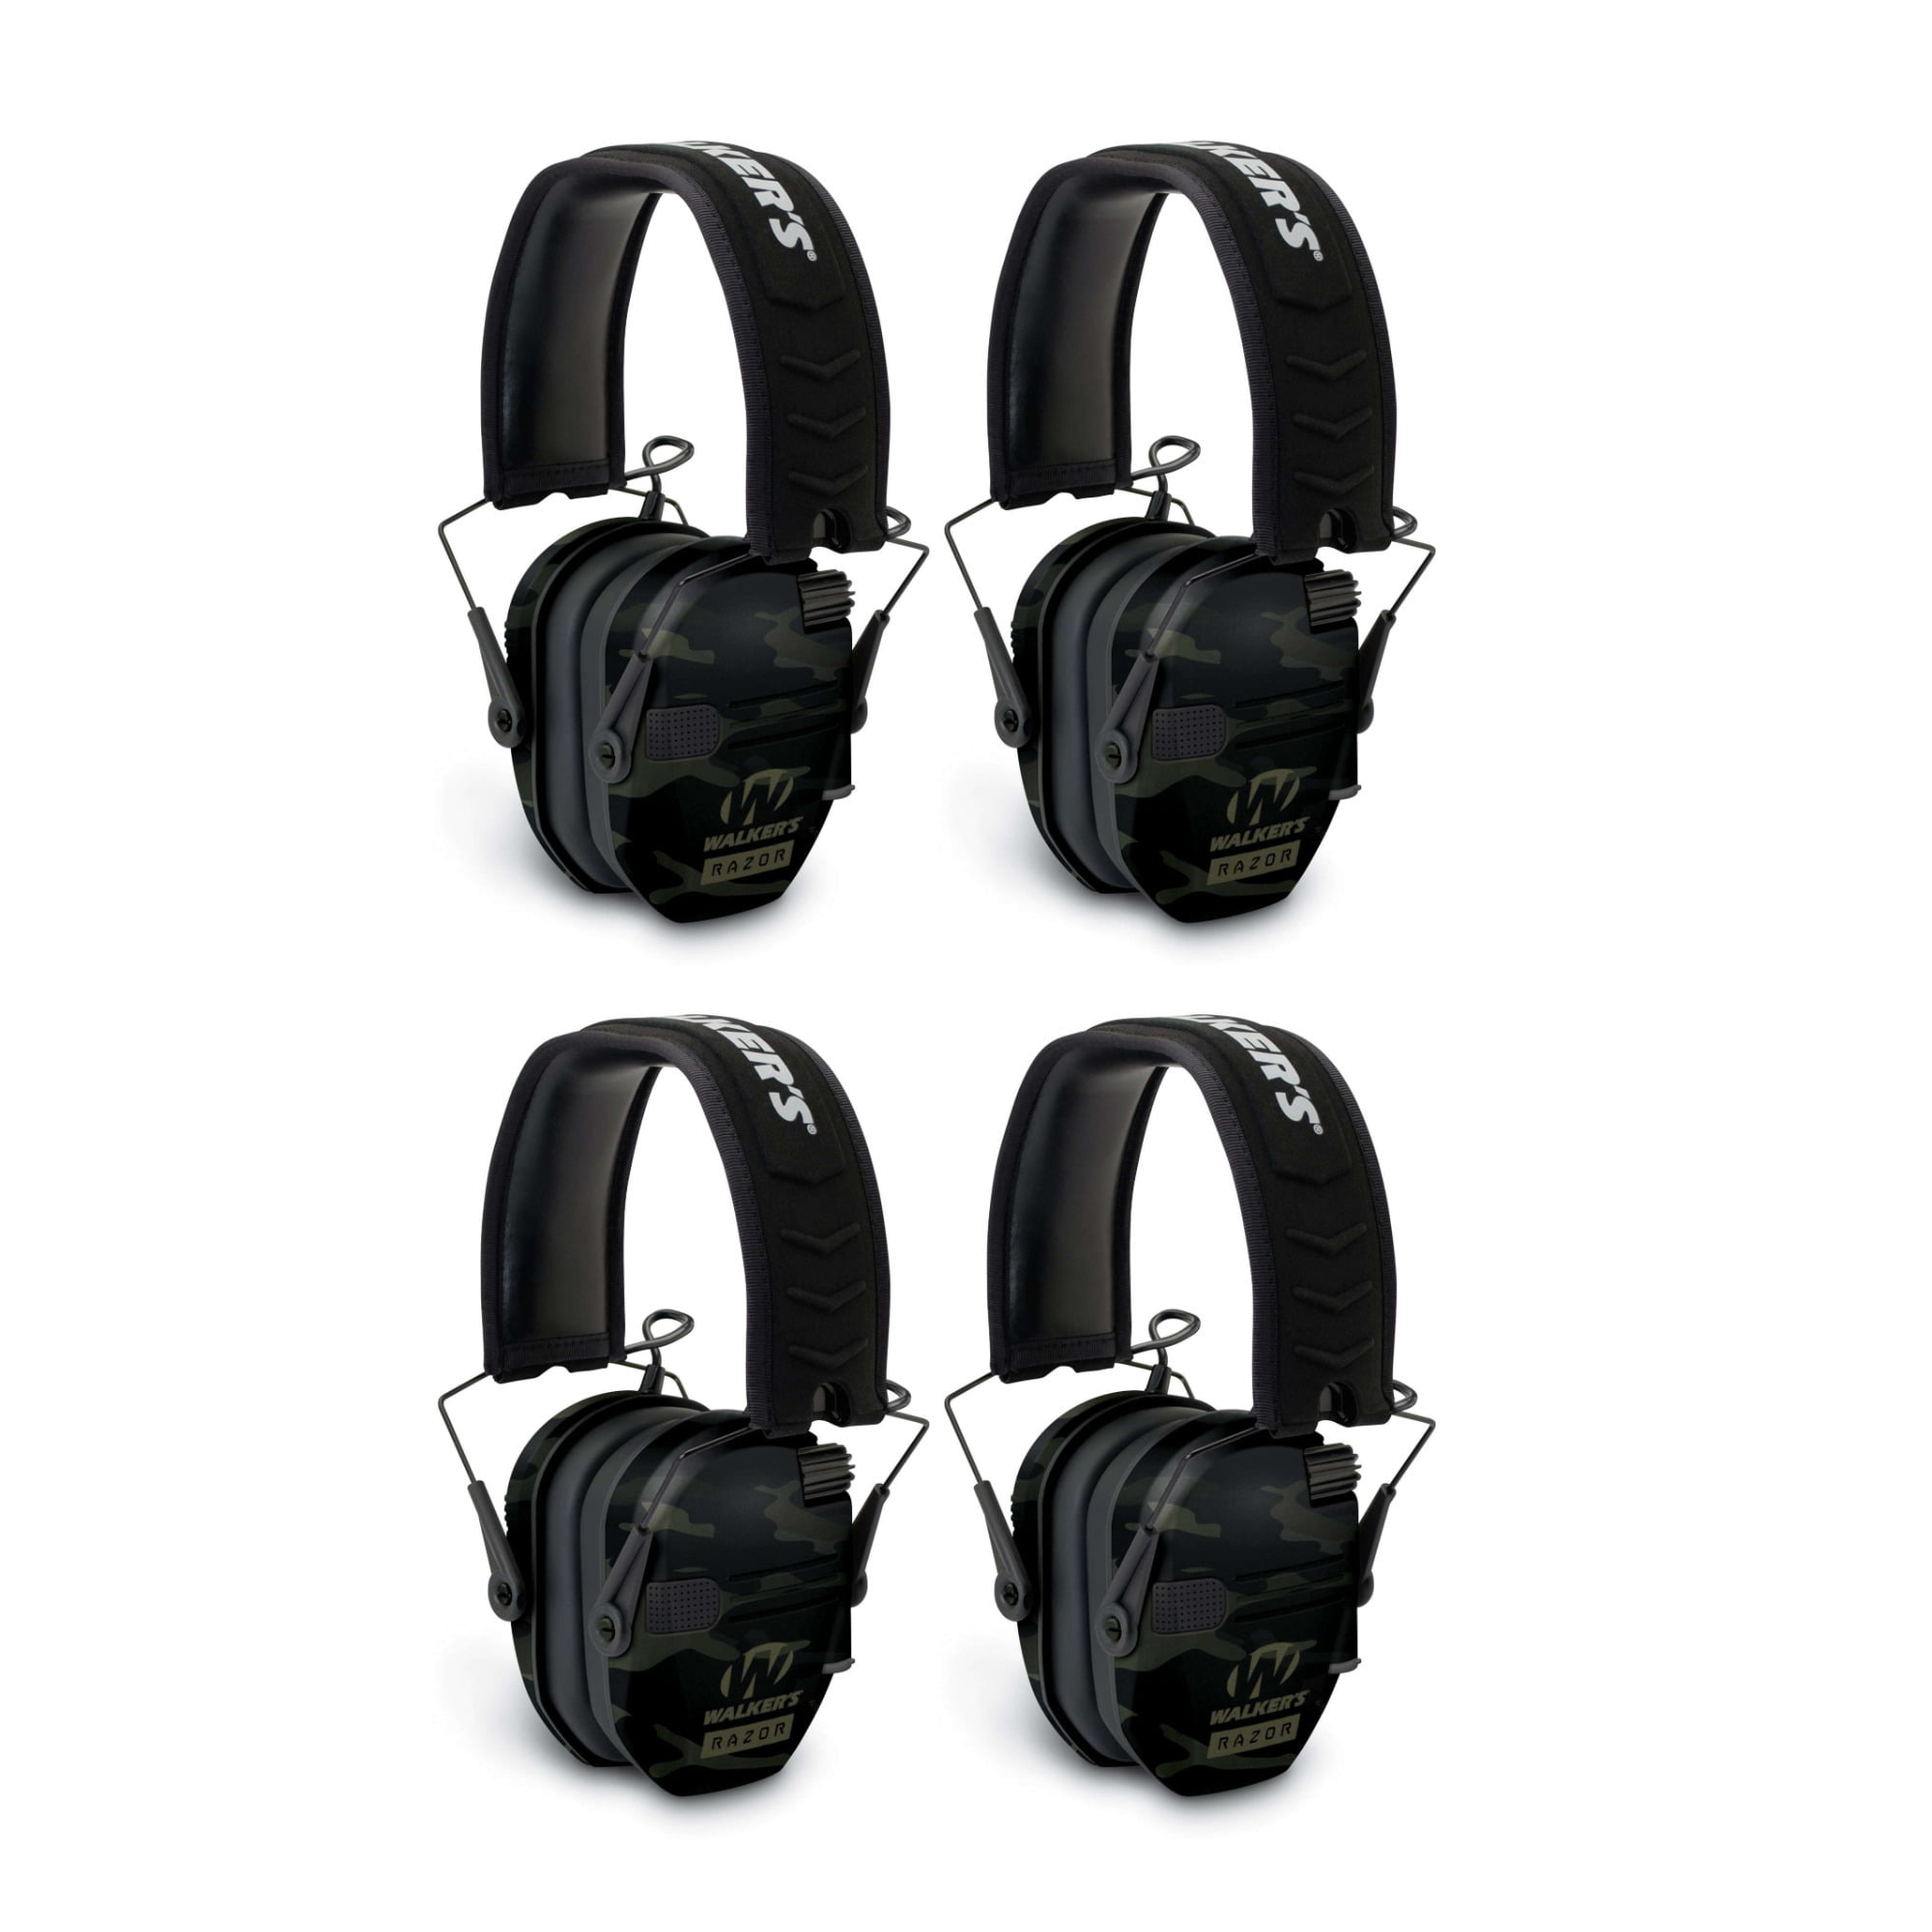 Walkers Razor Slim Electronic Ear Muffs Multicam Camo/Gray for sale online 